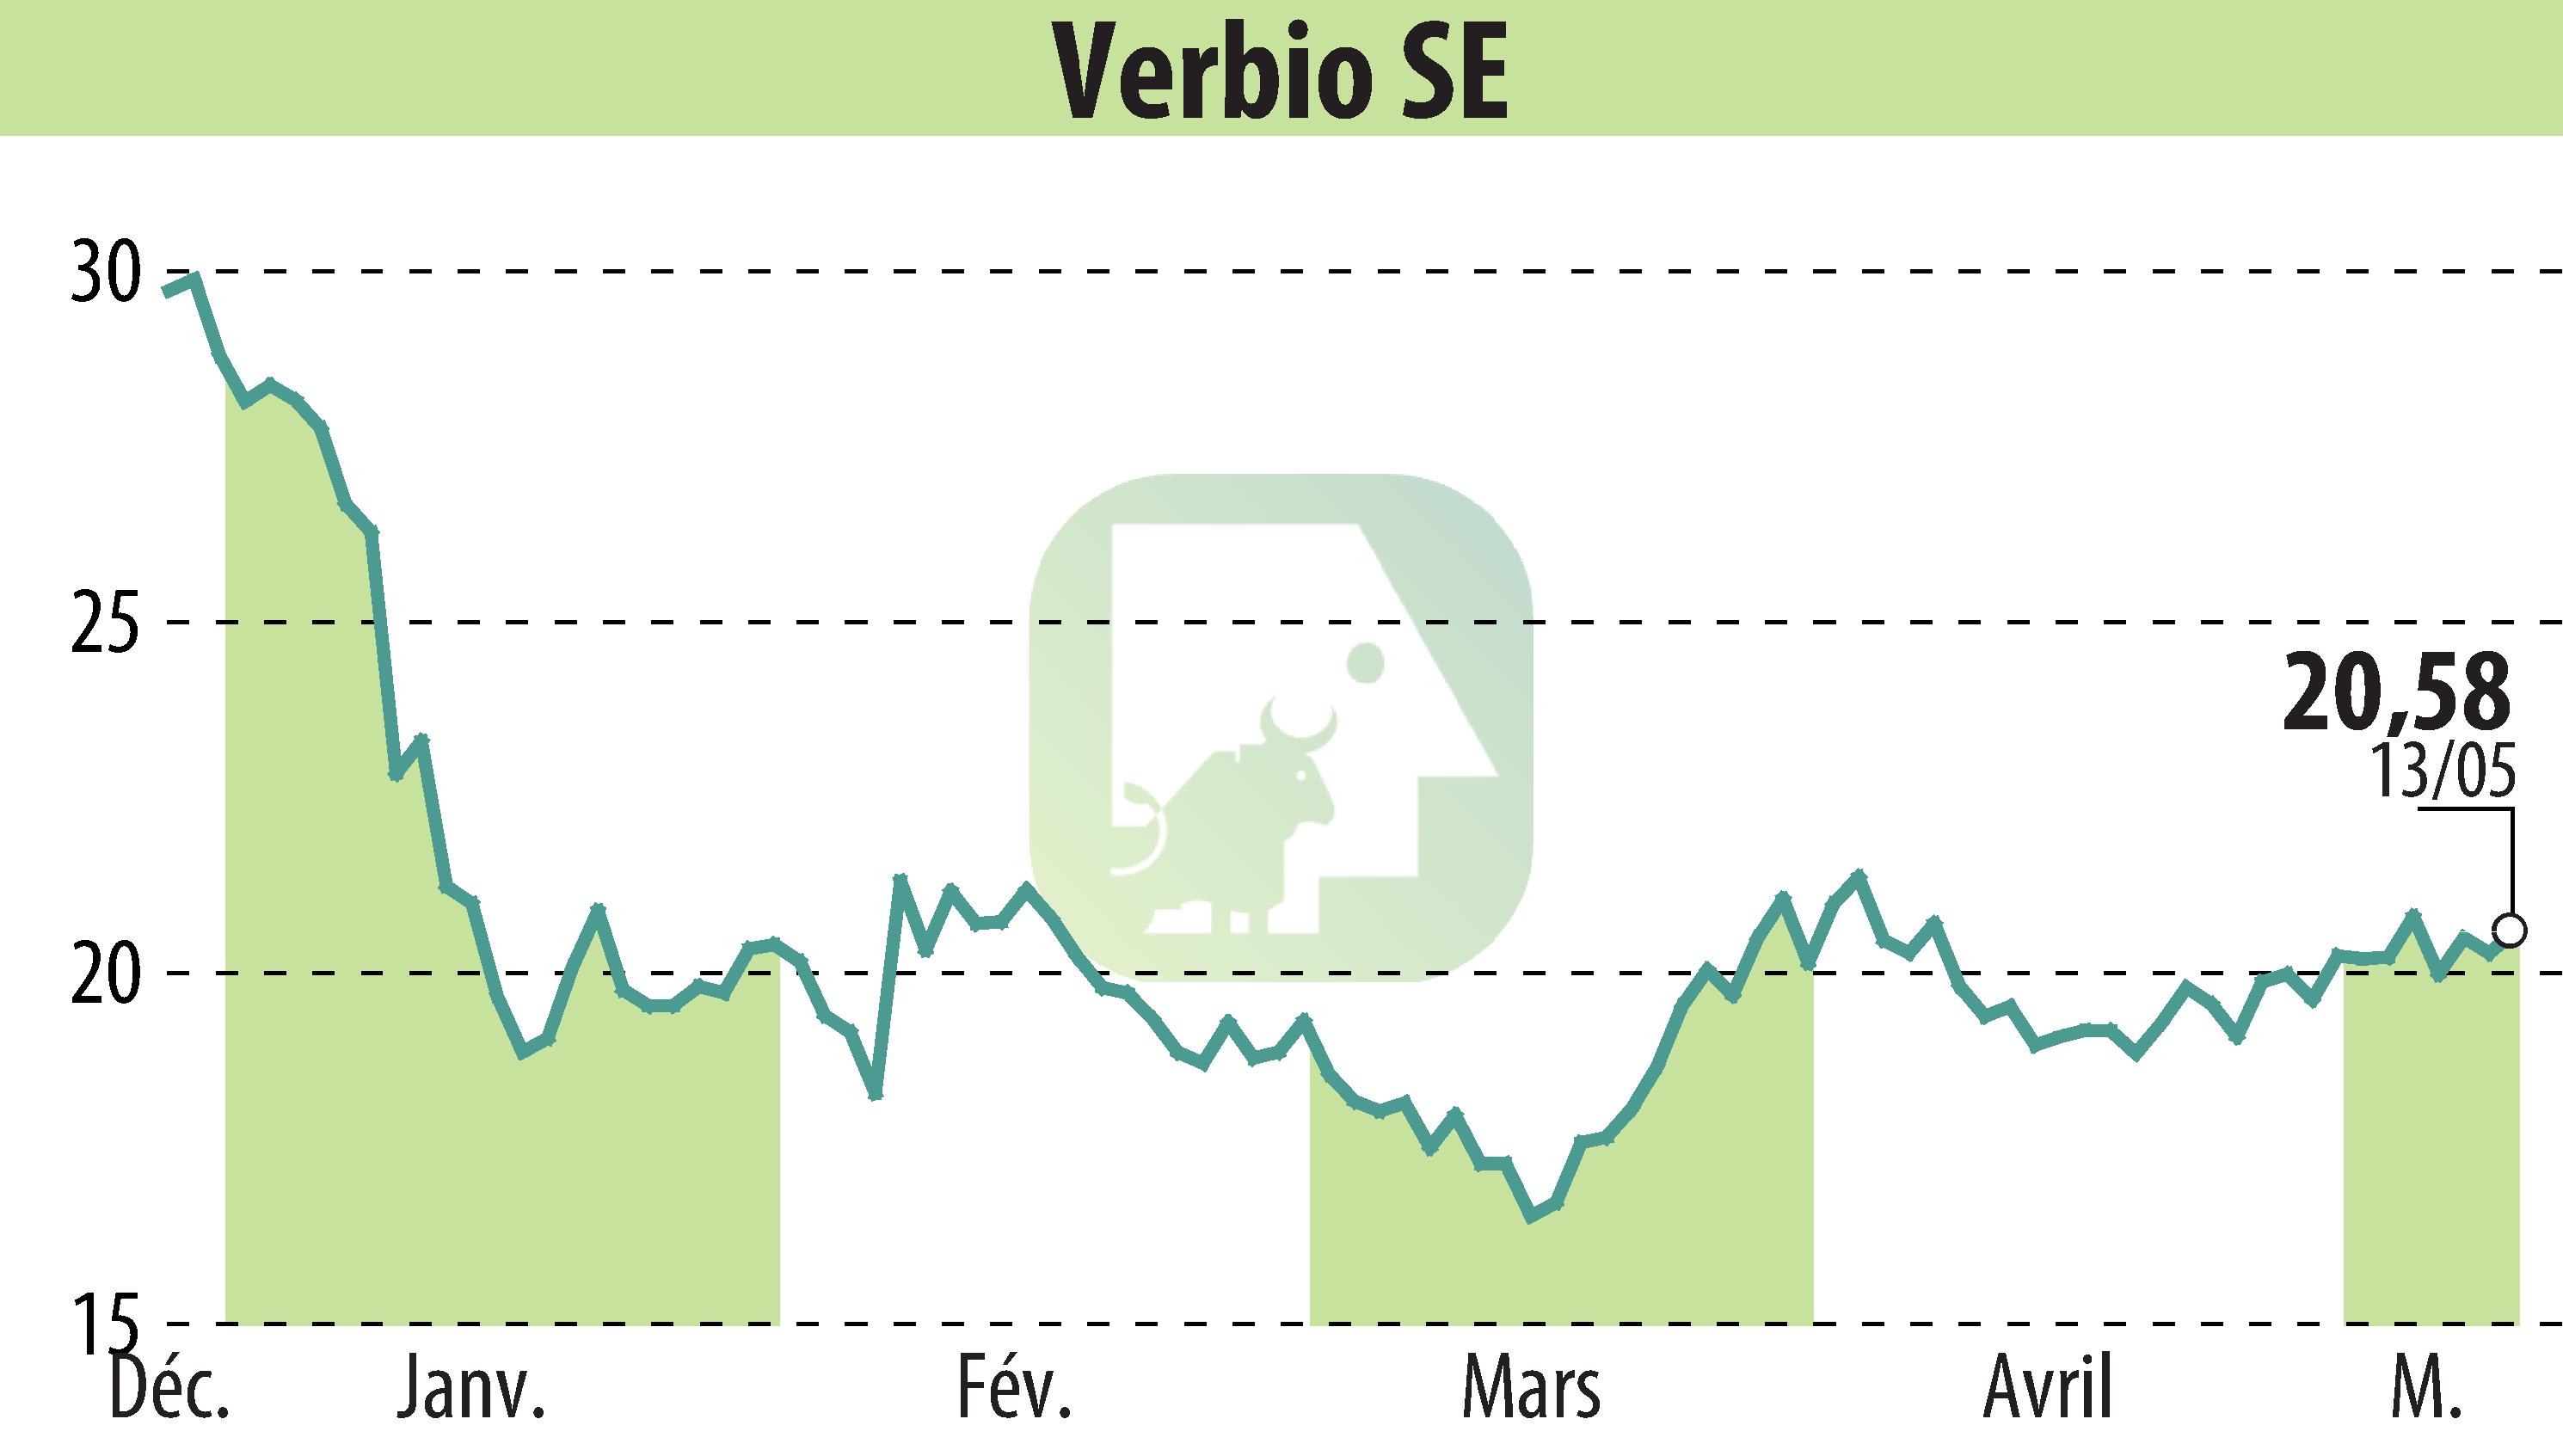 Stock price chart of VERBIO Vereinigte BioEnergie AG (EBR:VBK) showing fluctuations.